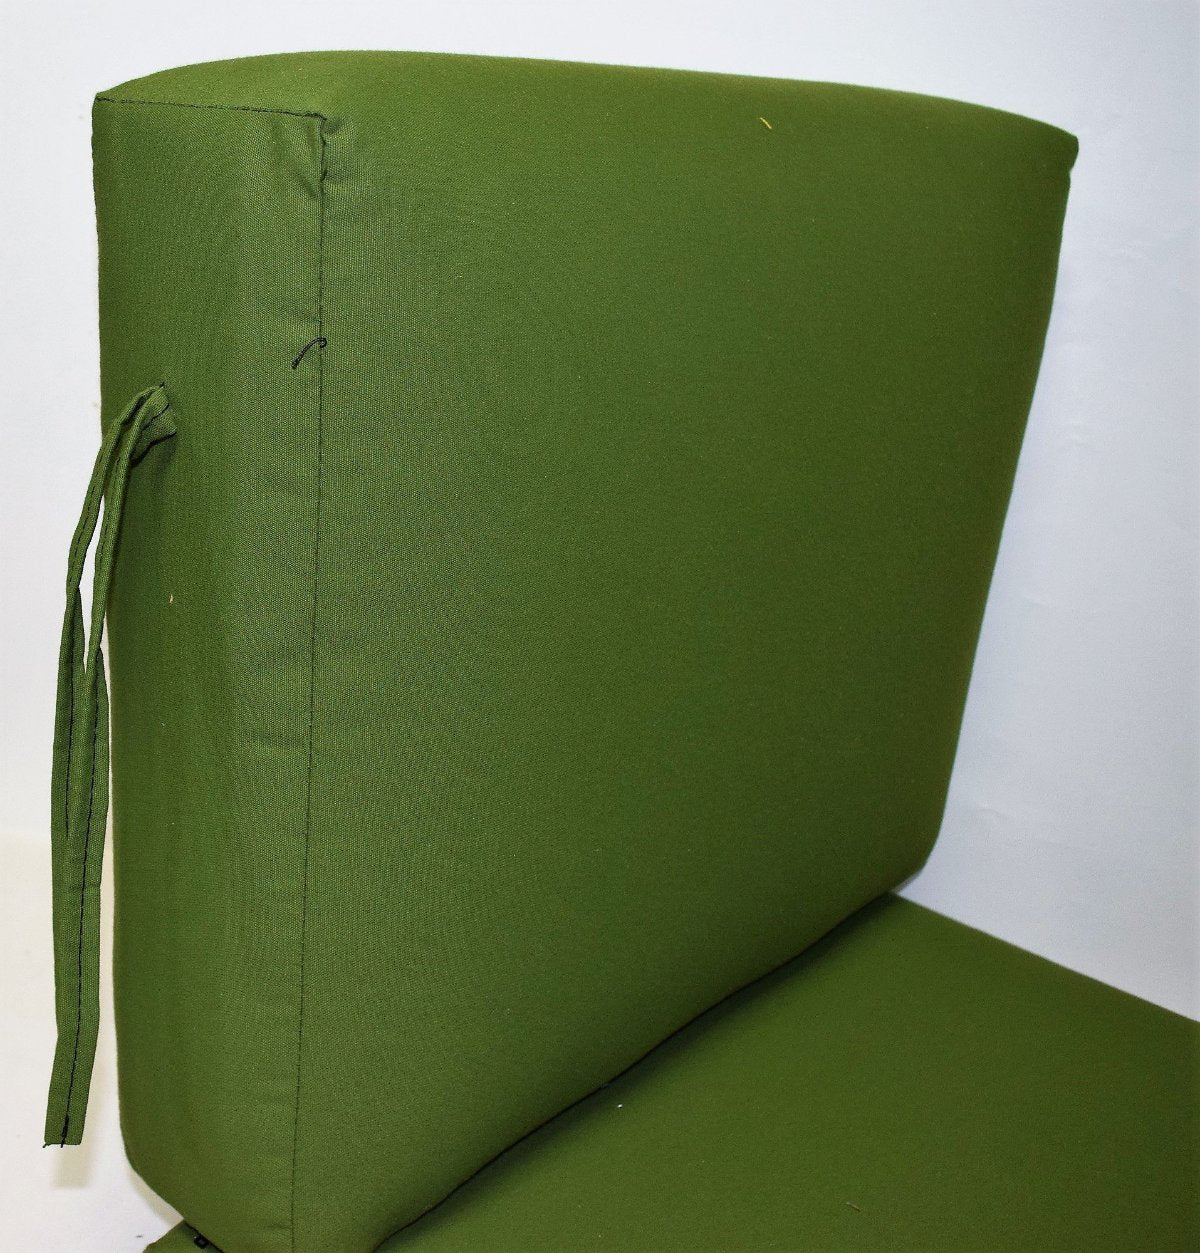 2 piece 24 wide x 26 deep seat x 20 high back in Epic Sunbrella Fabrics $289.99 -5"thick